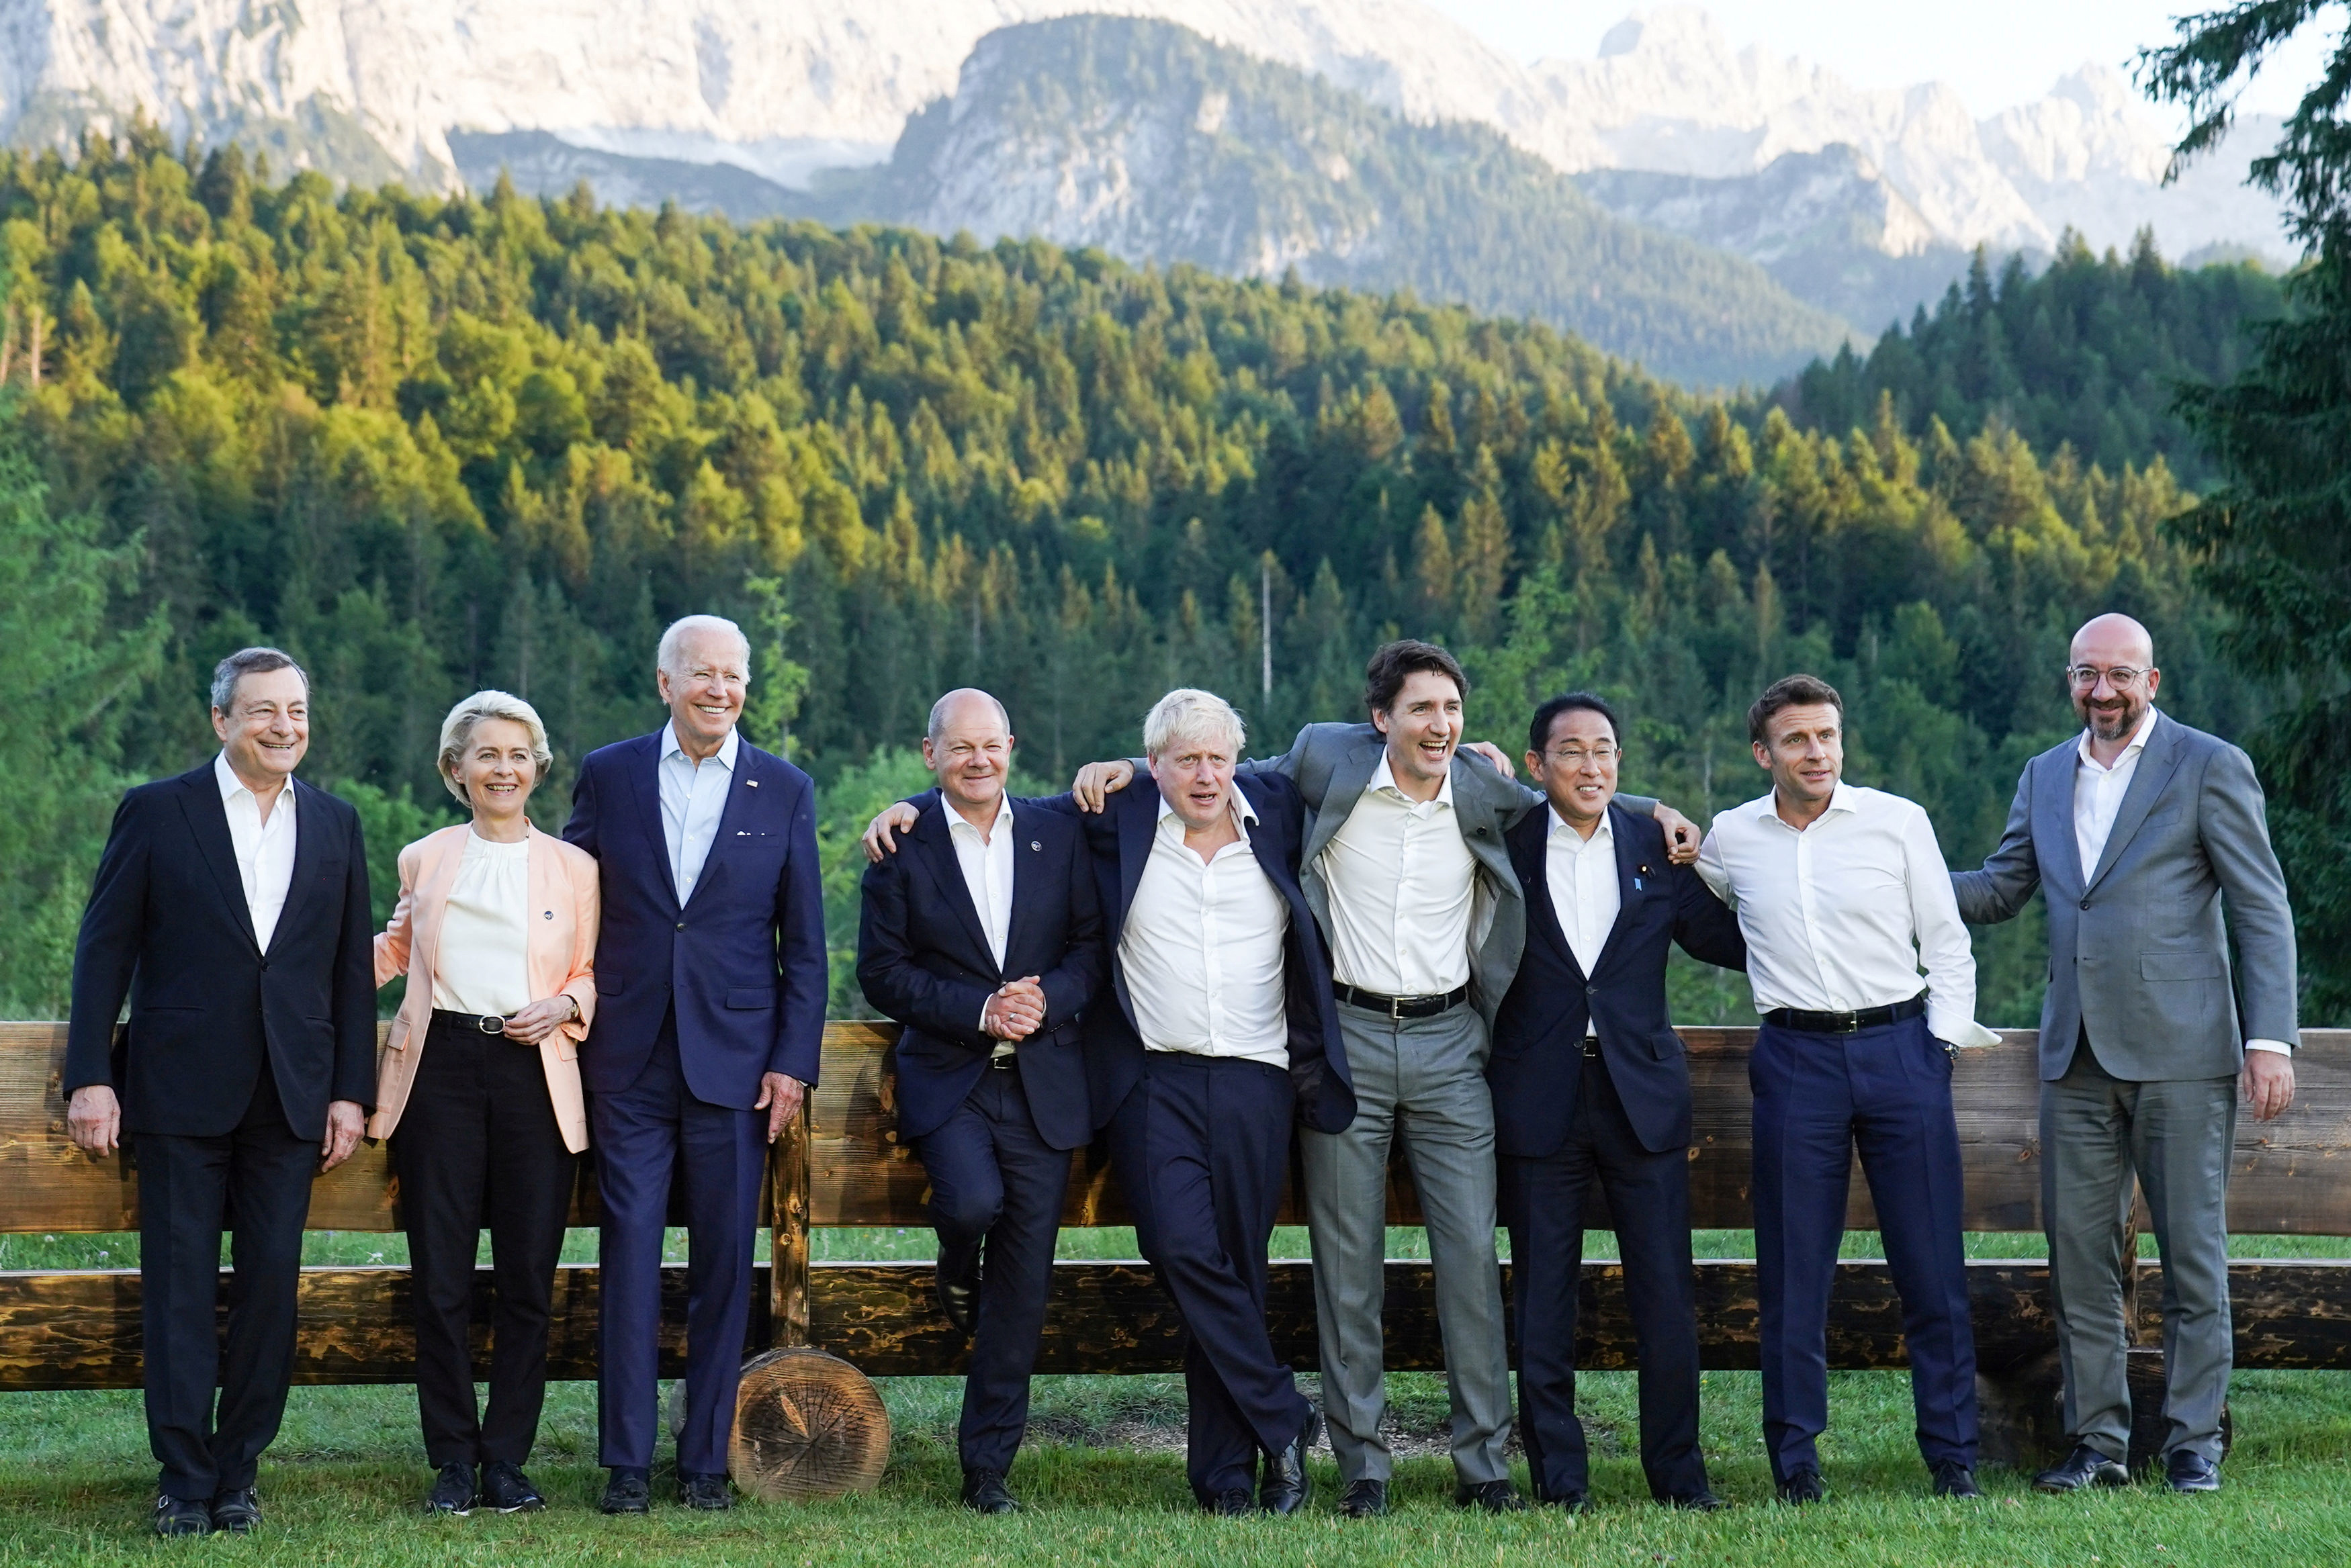 Los líderes del G7 se reunieron en Elmau, Alemania (Stefan Rousseau/Pool via REUTERS)